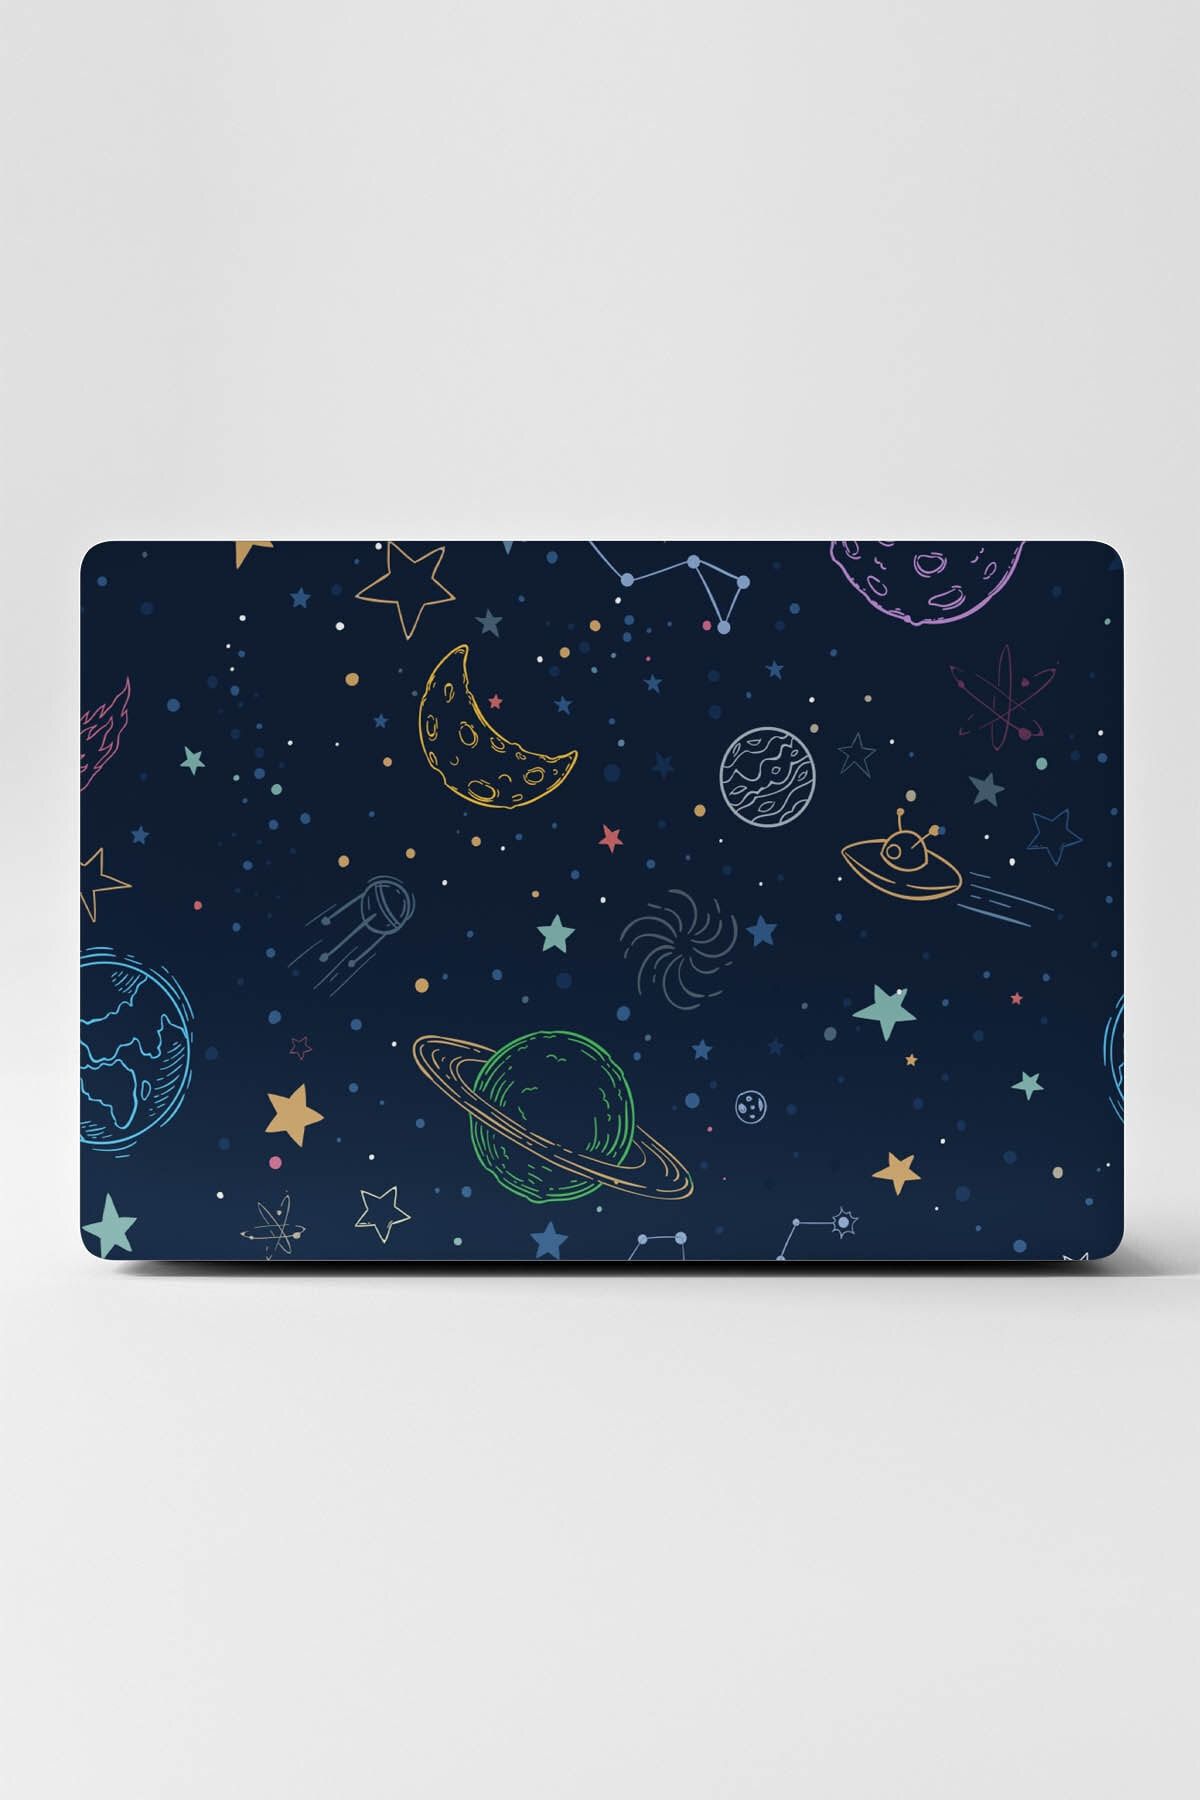 TUGİBU Mavi Uyumlu Laptop Sticker Kaplama Notebook Macbook Galaksi Gezegenler Evren